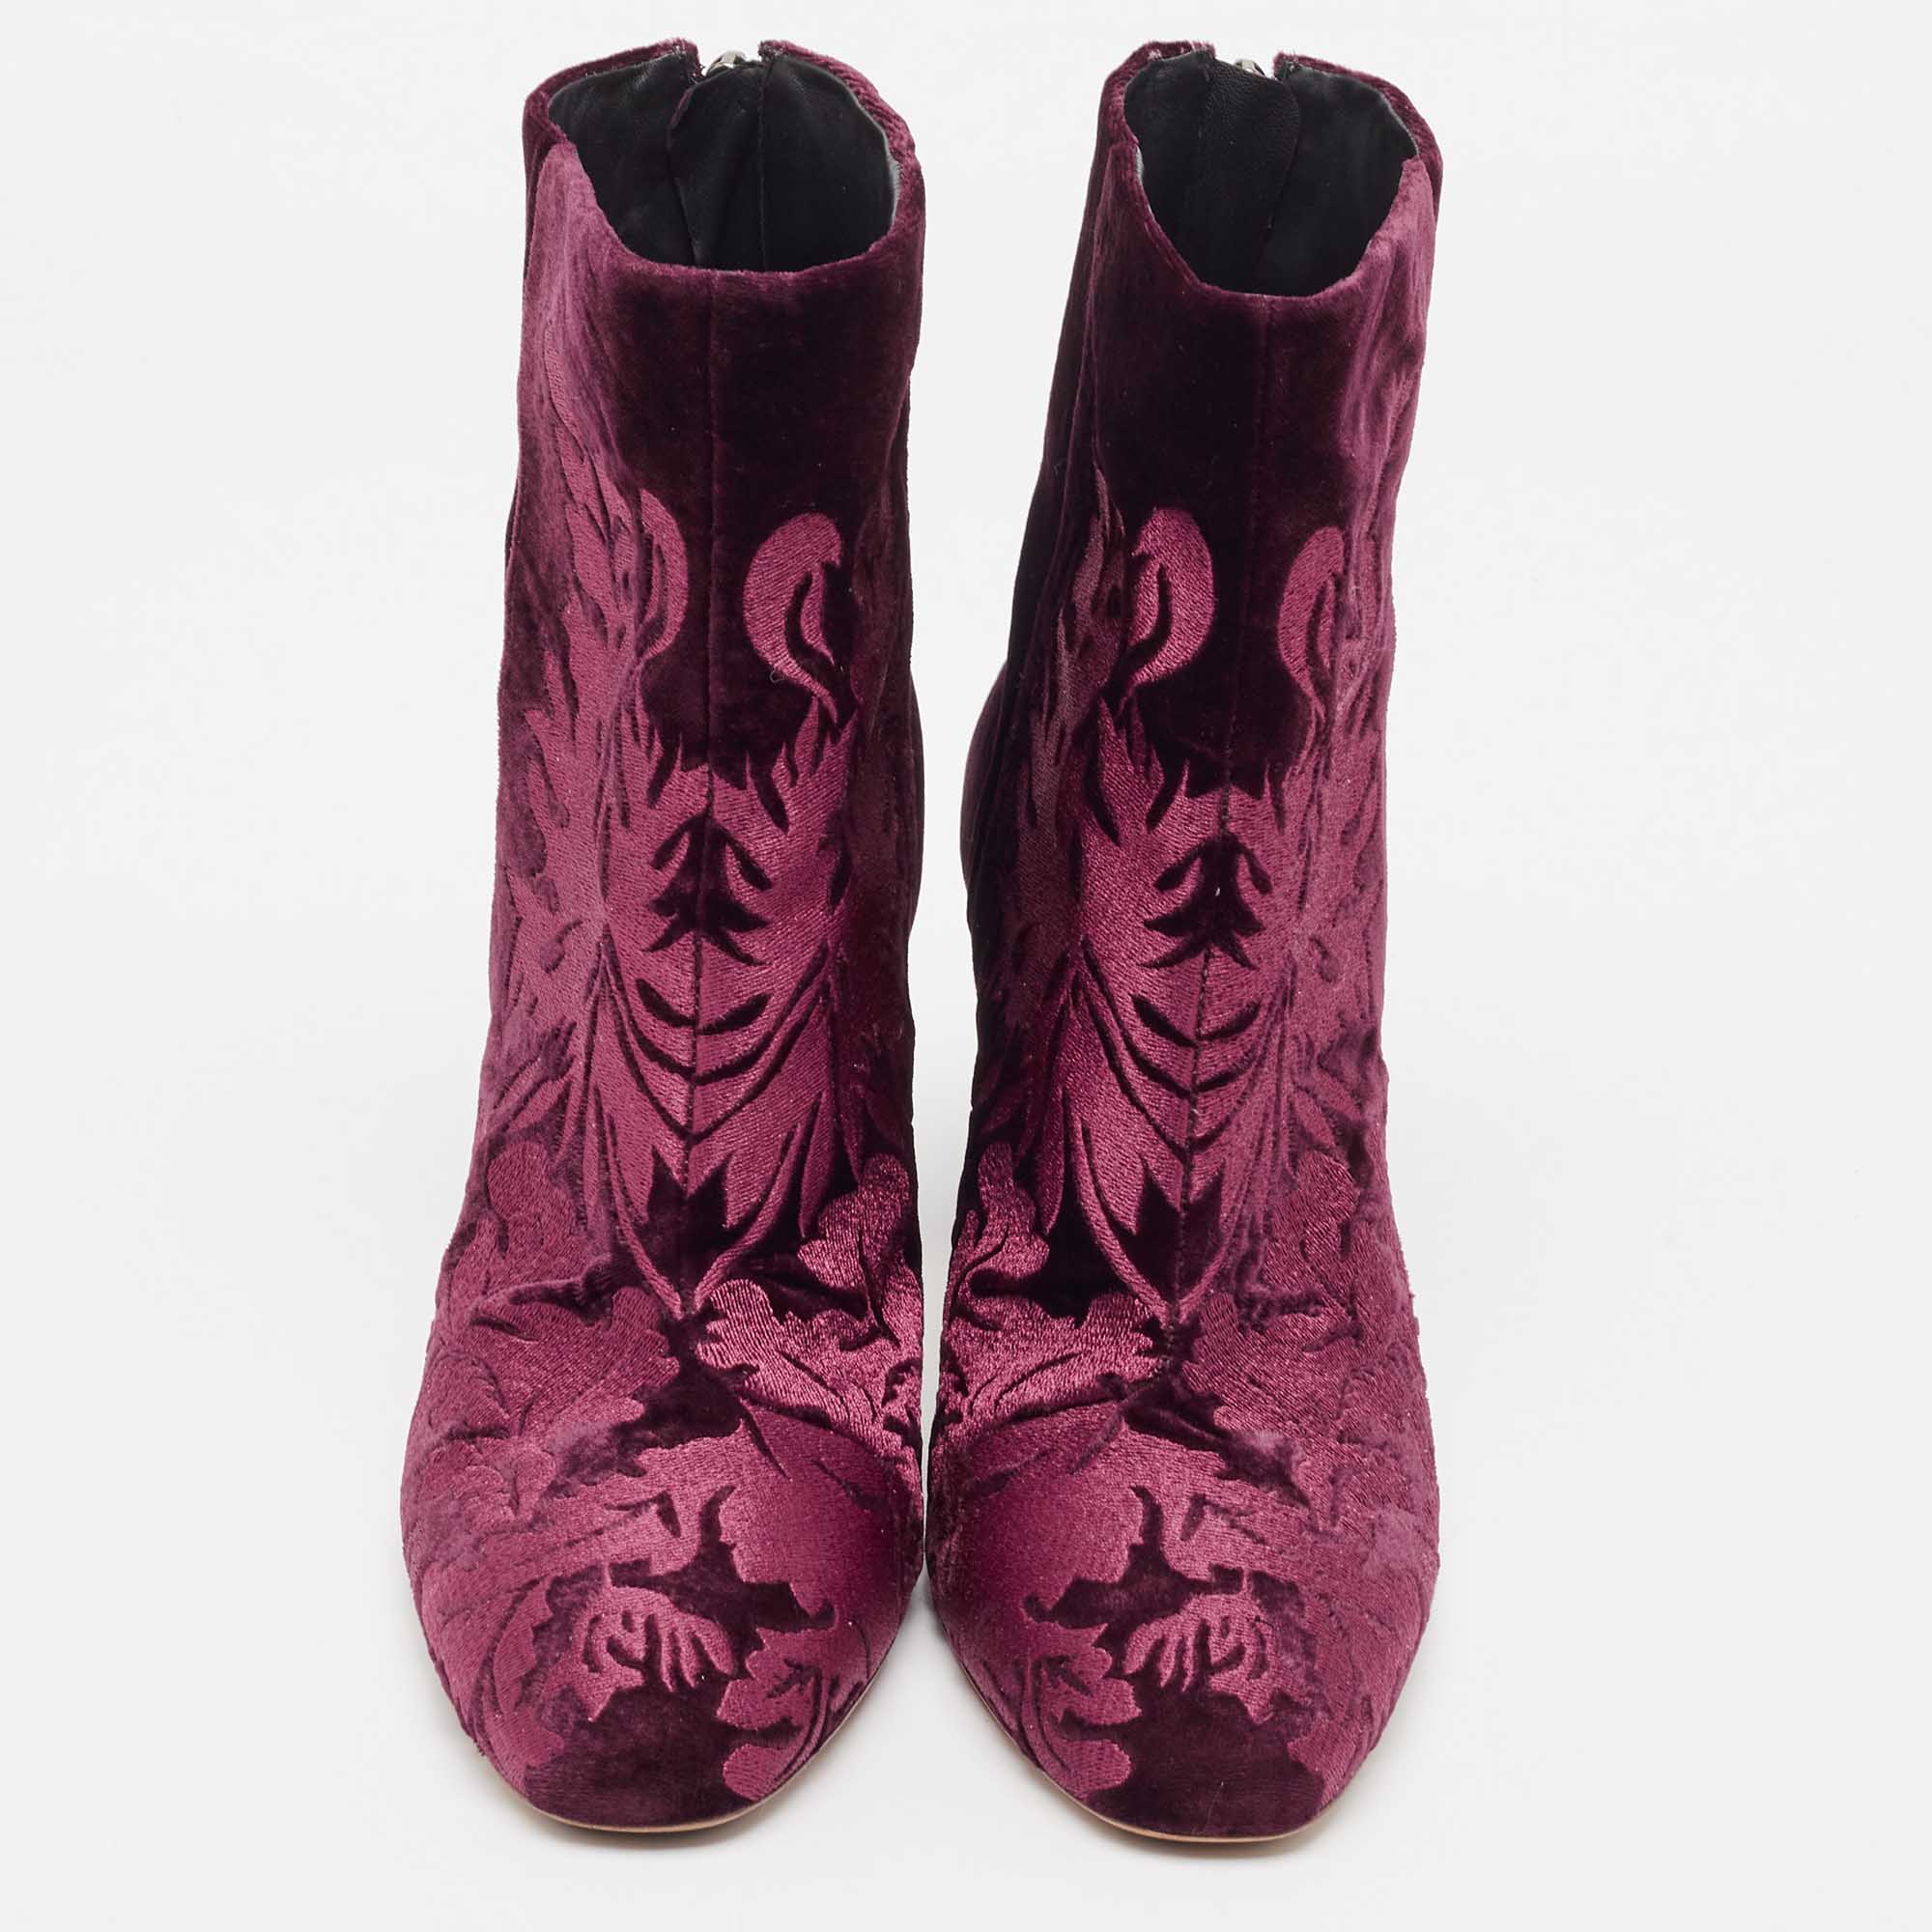 Alexandre Birman Burgundy Floral Velvet Block Heel Ankle Boots Size 41